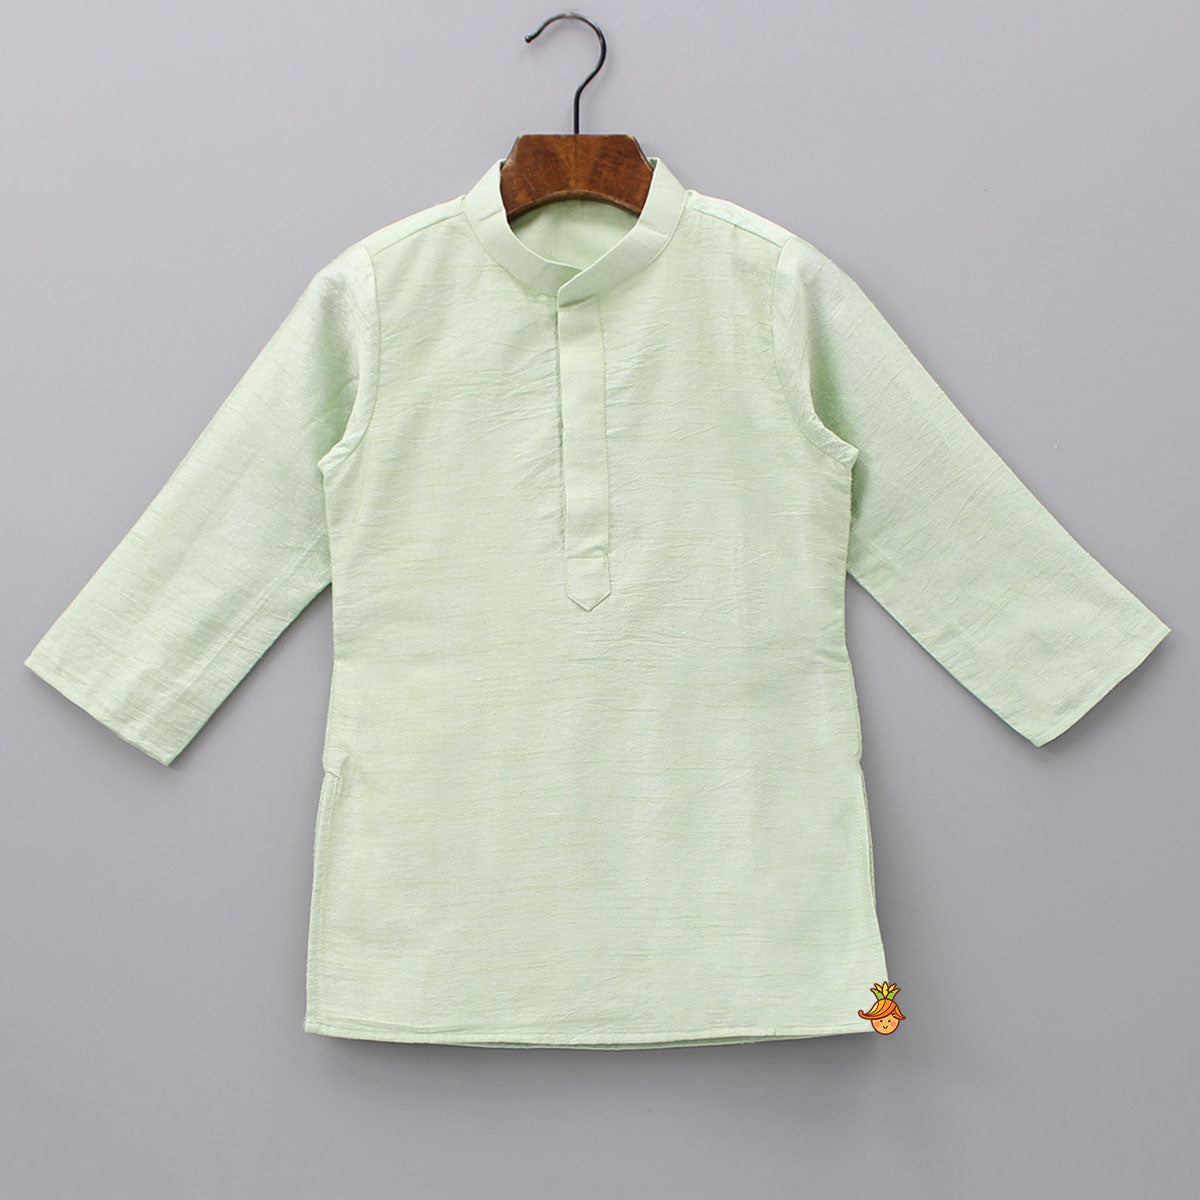 Floral Printed Thread Work Jacket With Green Kurta And Pyjama